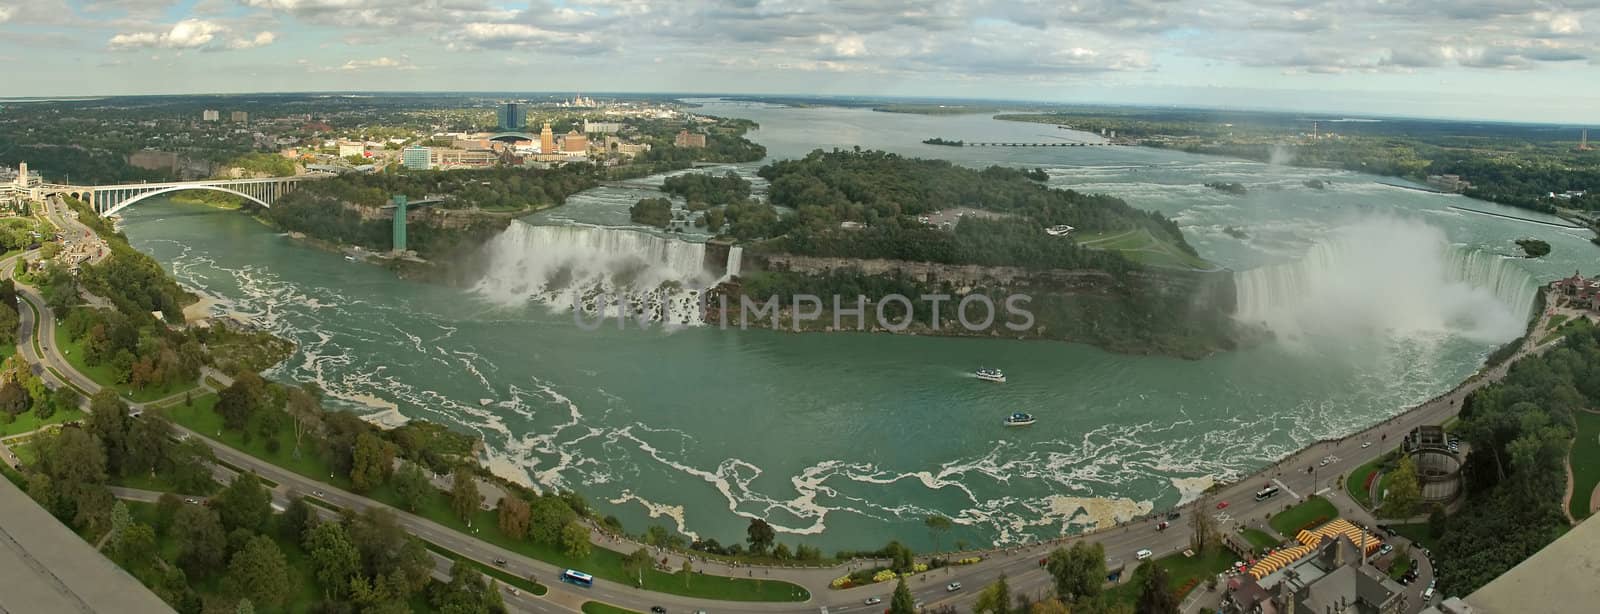 Niagara falls panorama photo, both waterfalls in picture, taken from canadian side